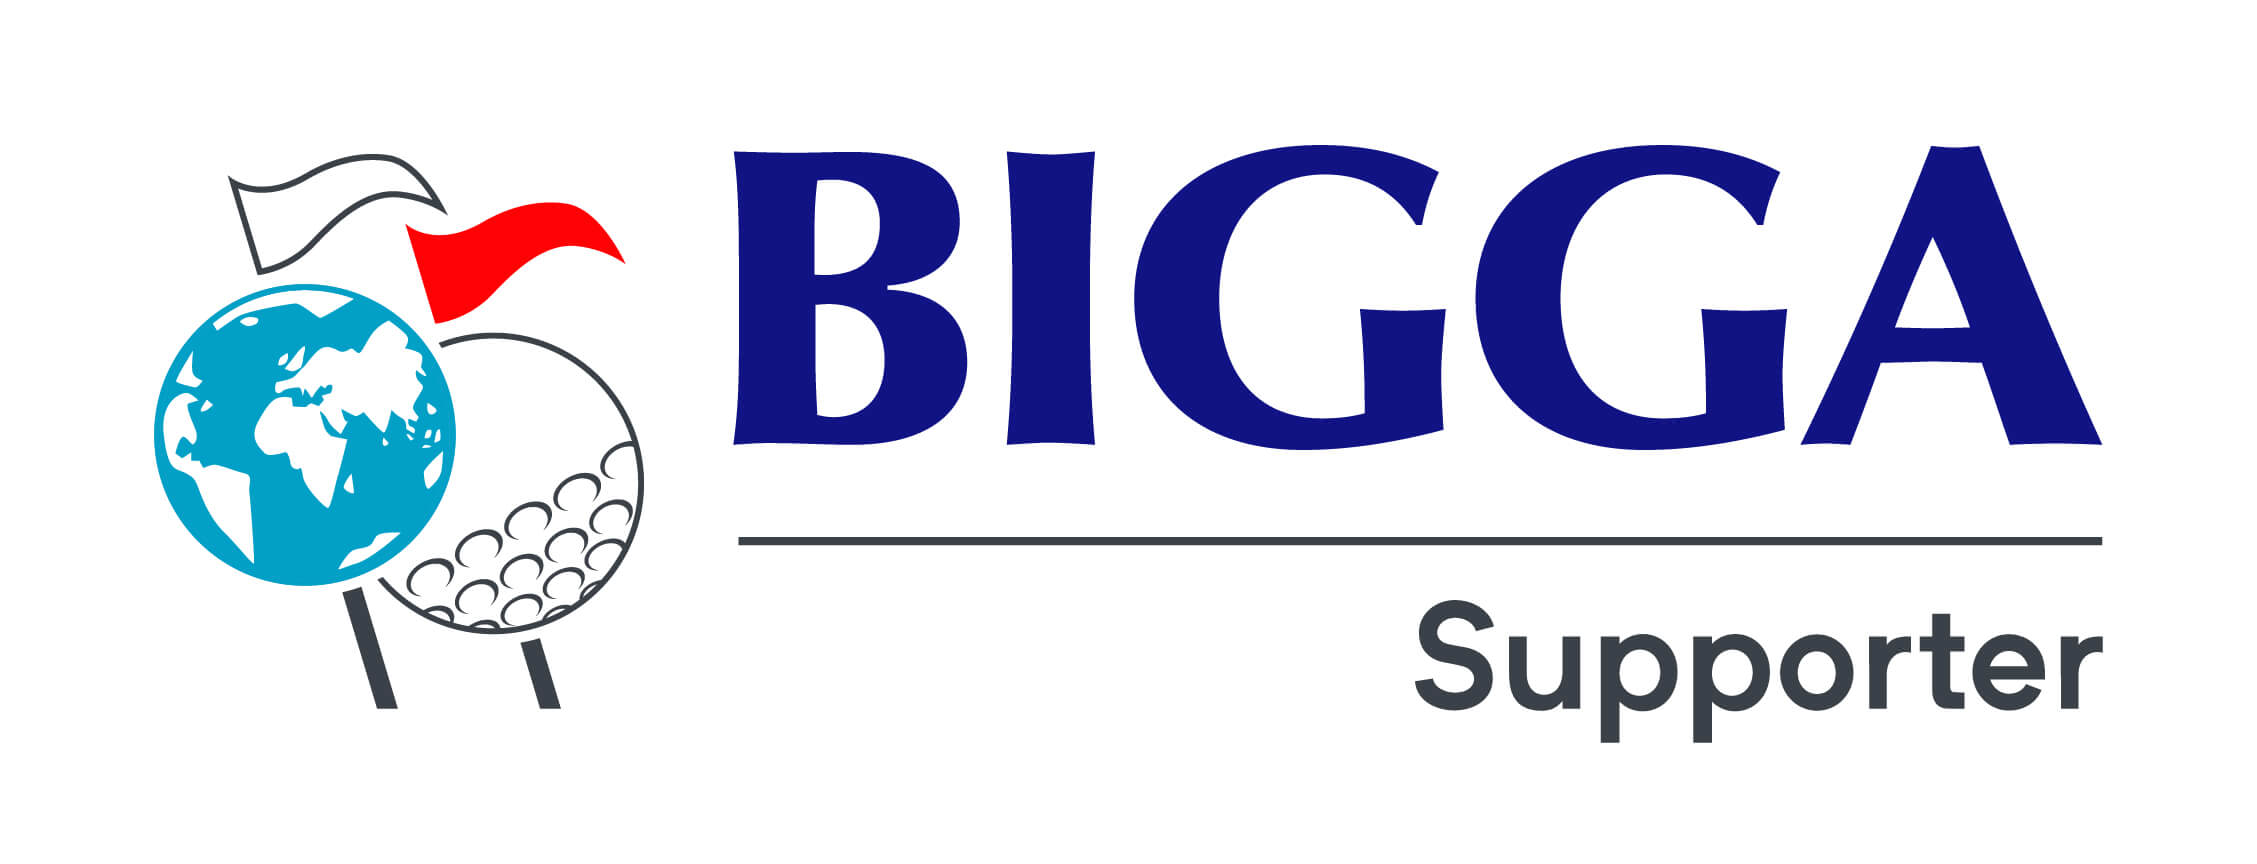 Bigga Supporter Logo